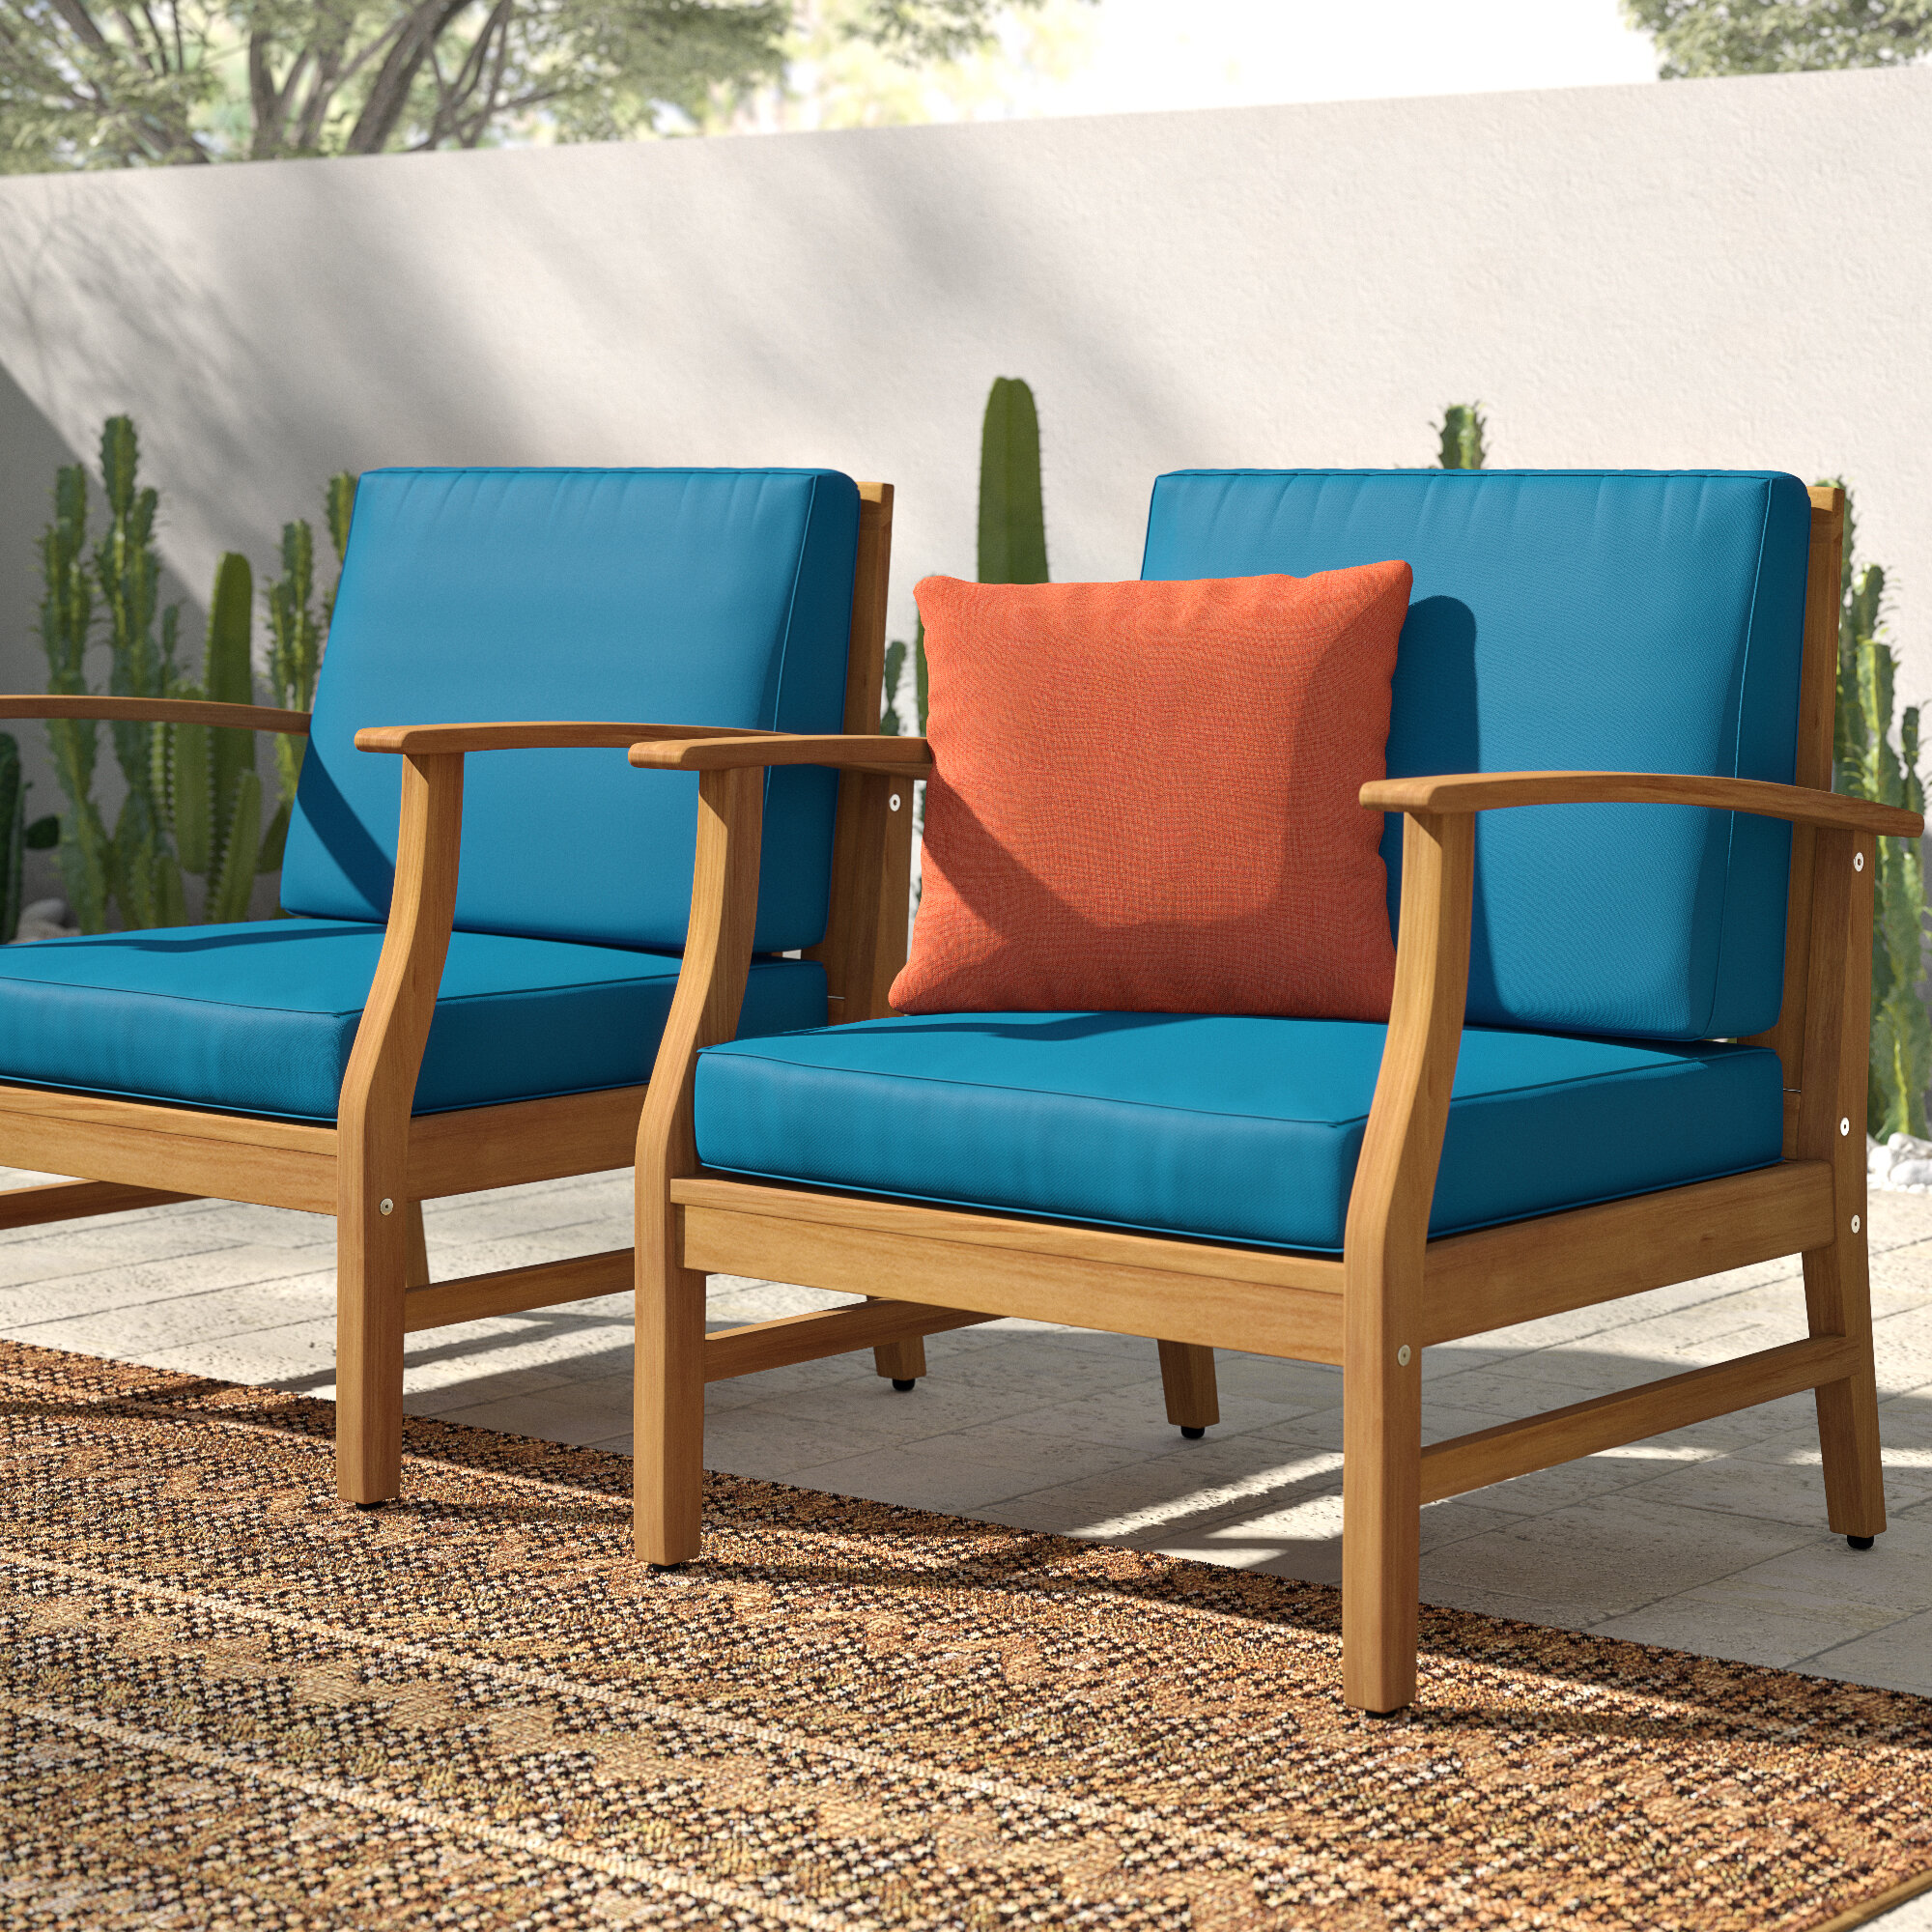 Highland Dunes Joetta Outdoor Wood Patio Chair With Cushions Reviews Wayfair